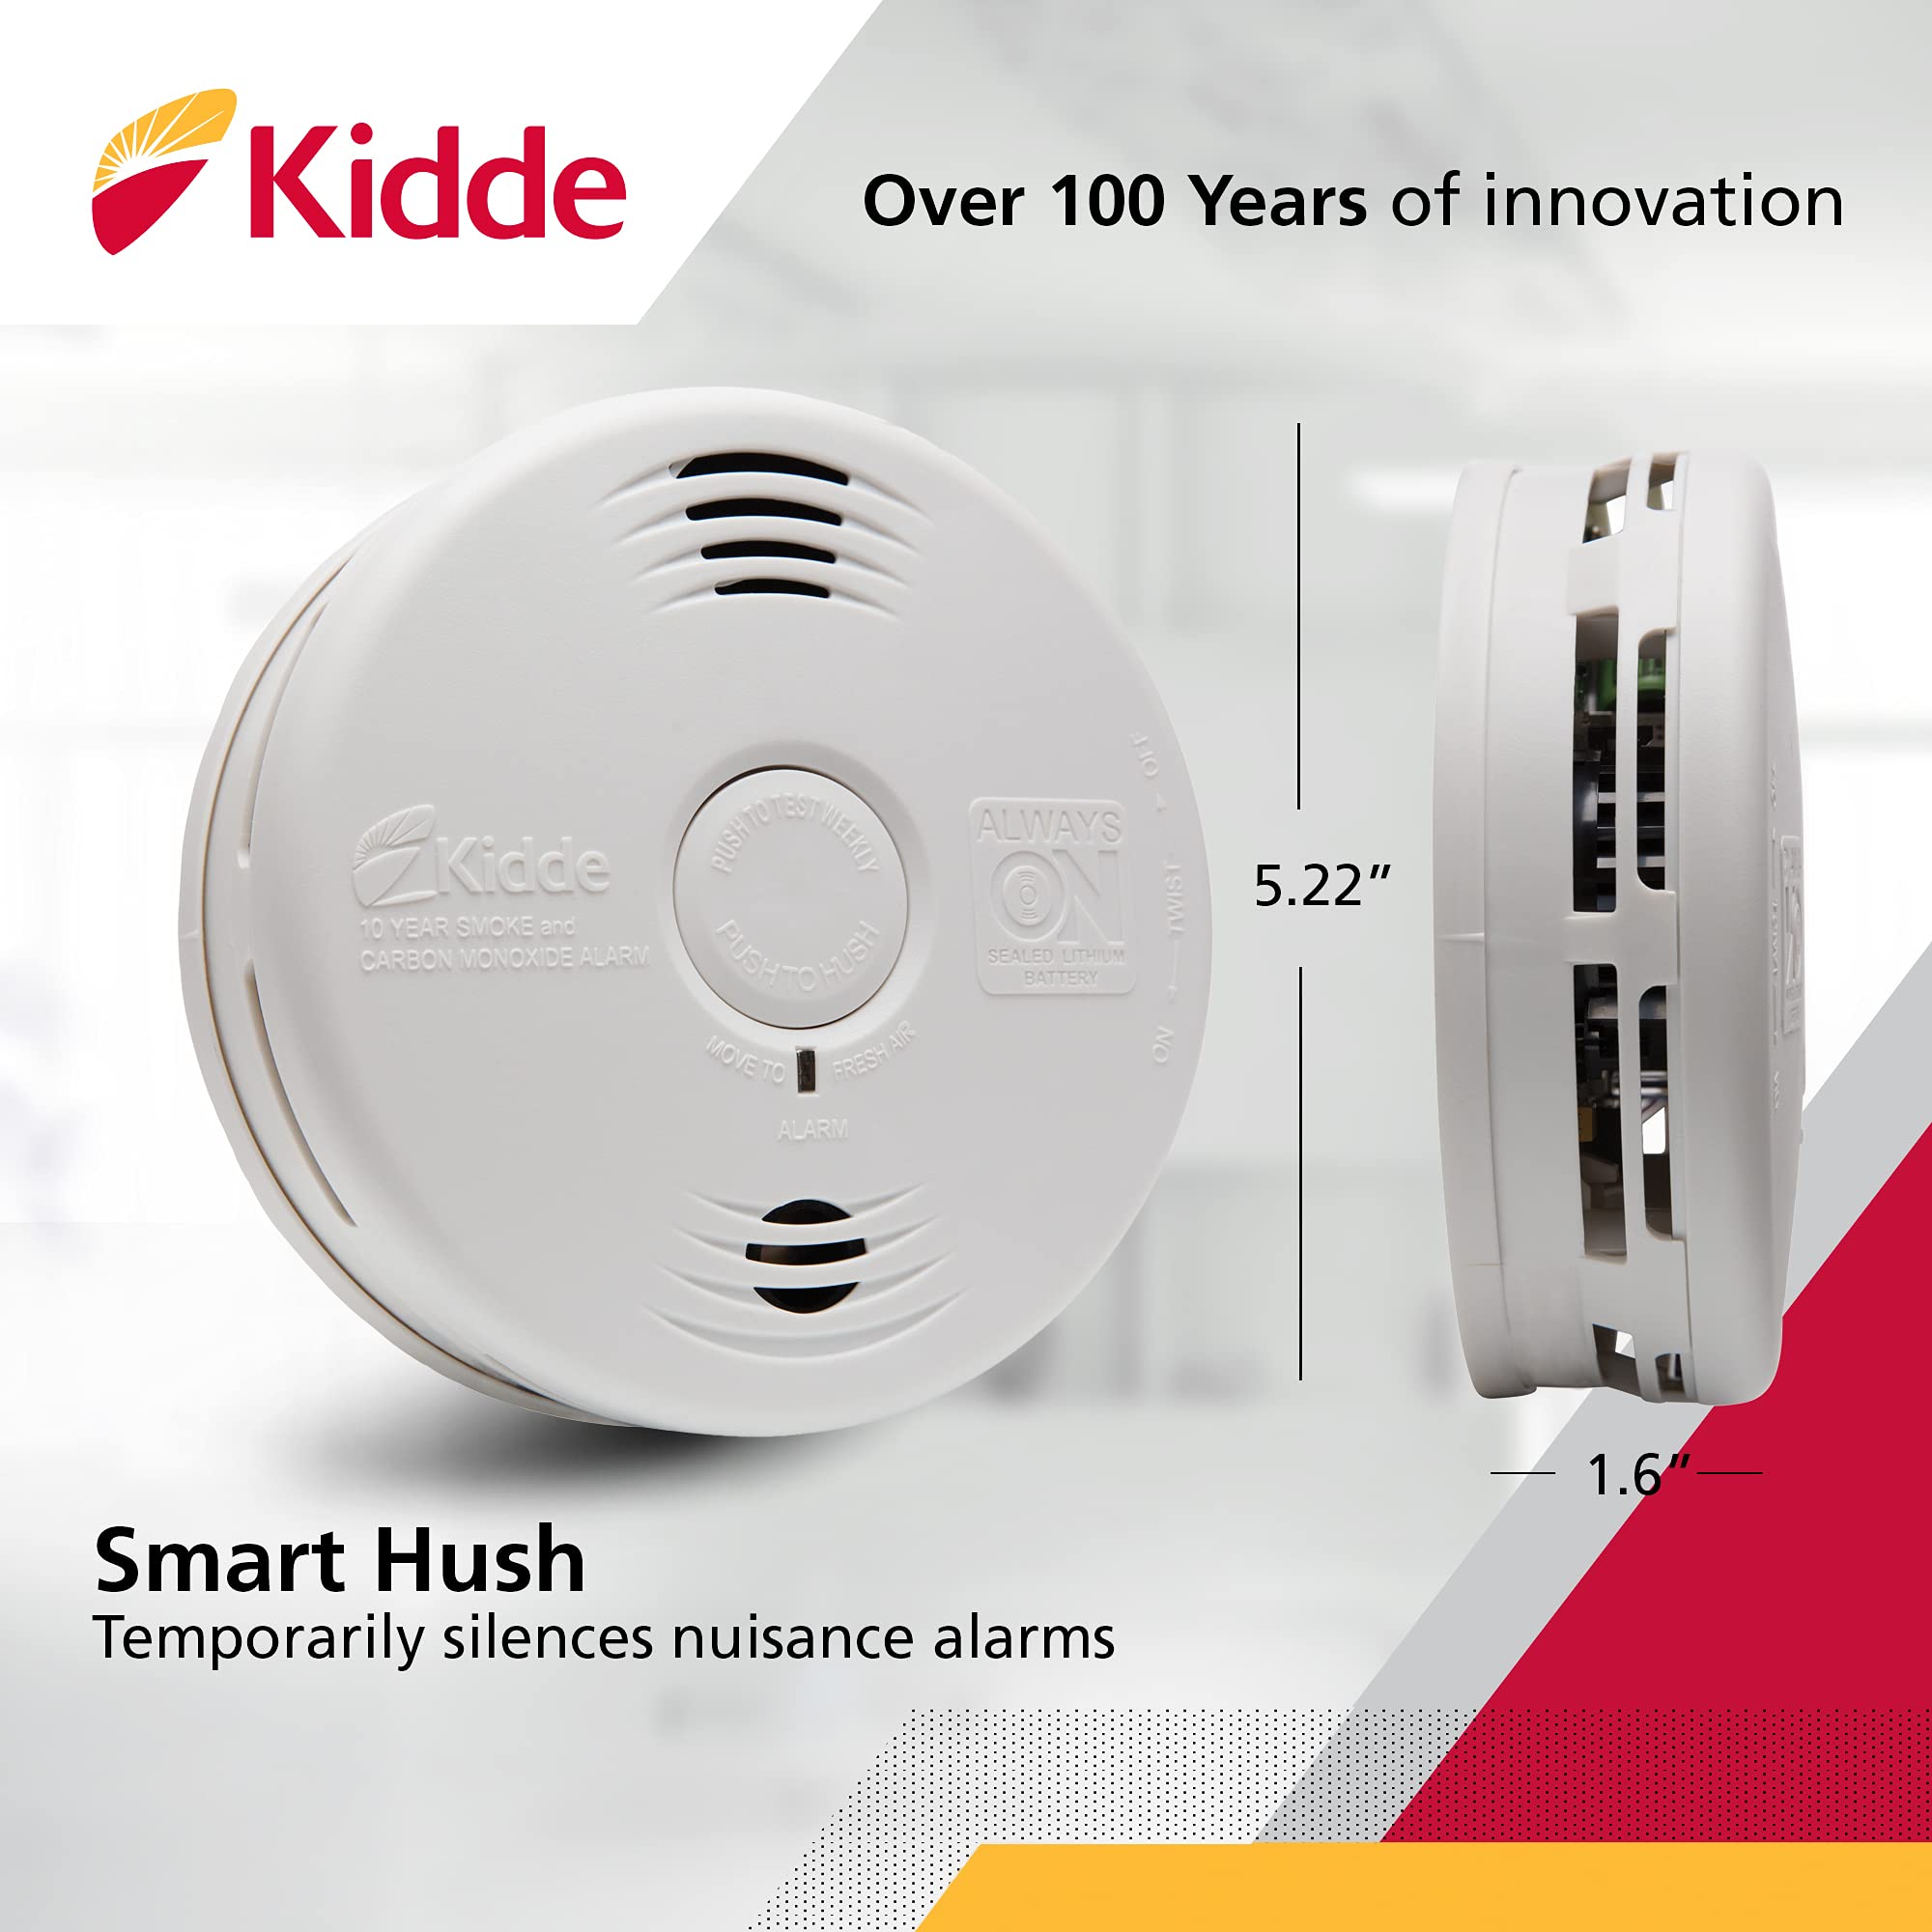 Kidde 21026065 Smoke & Carbon Monoxide Alarm with Voice Warning